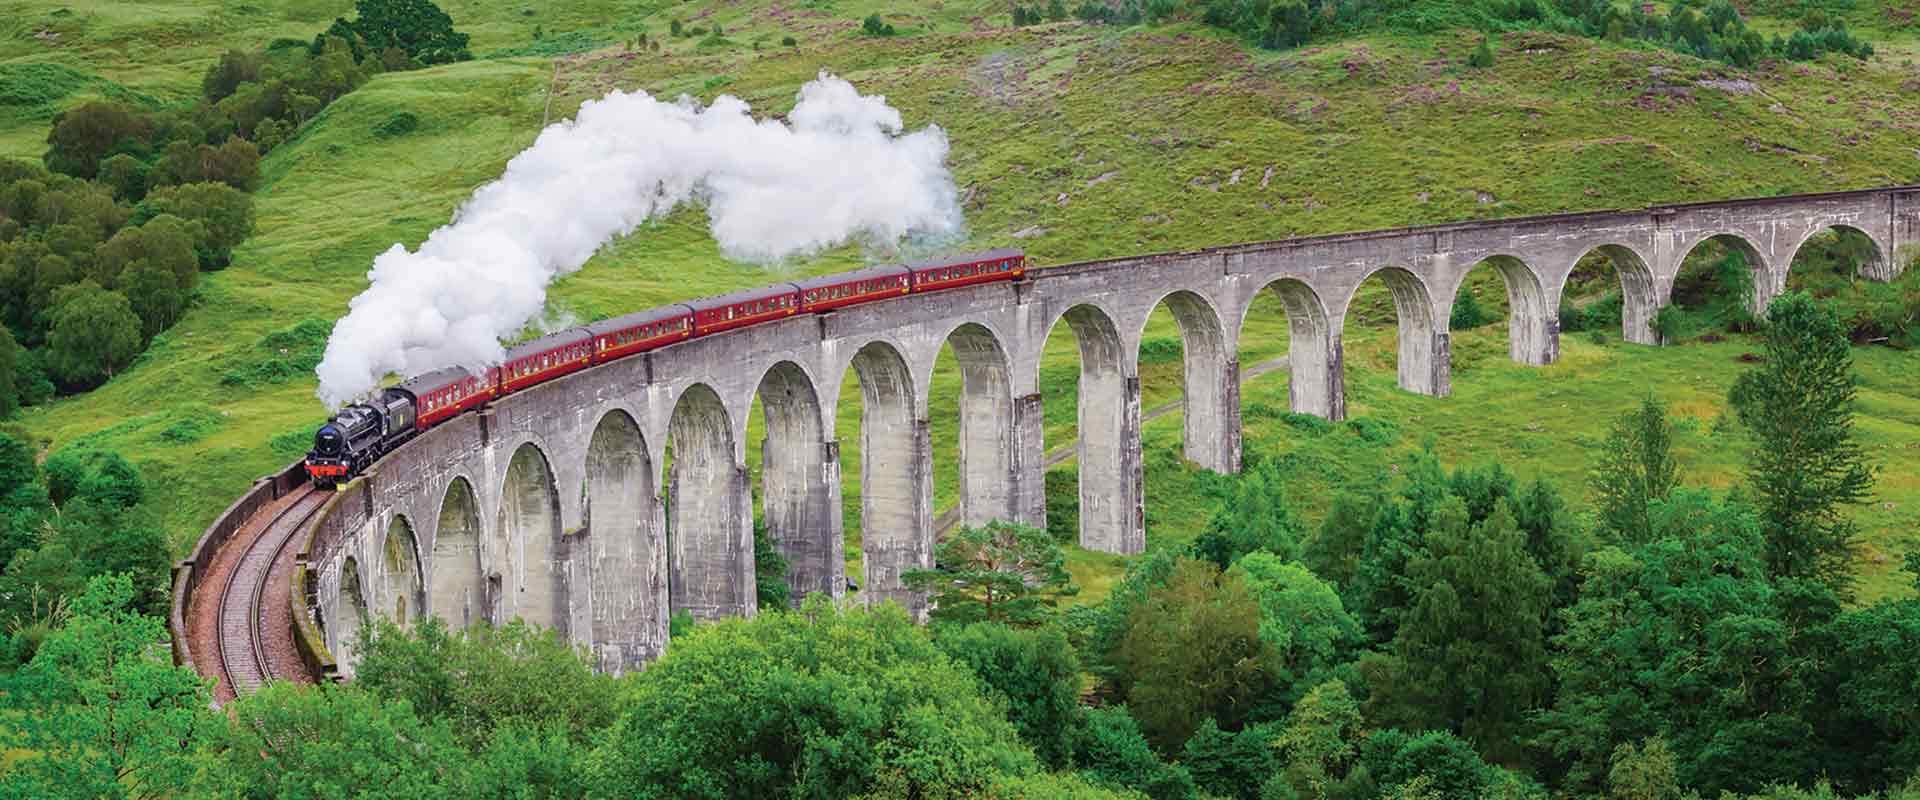 panorama viaduct jacobite steam train scotland